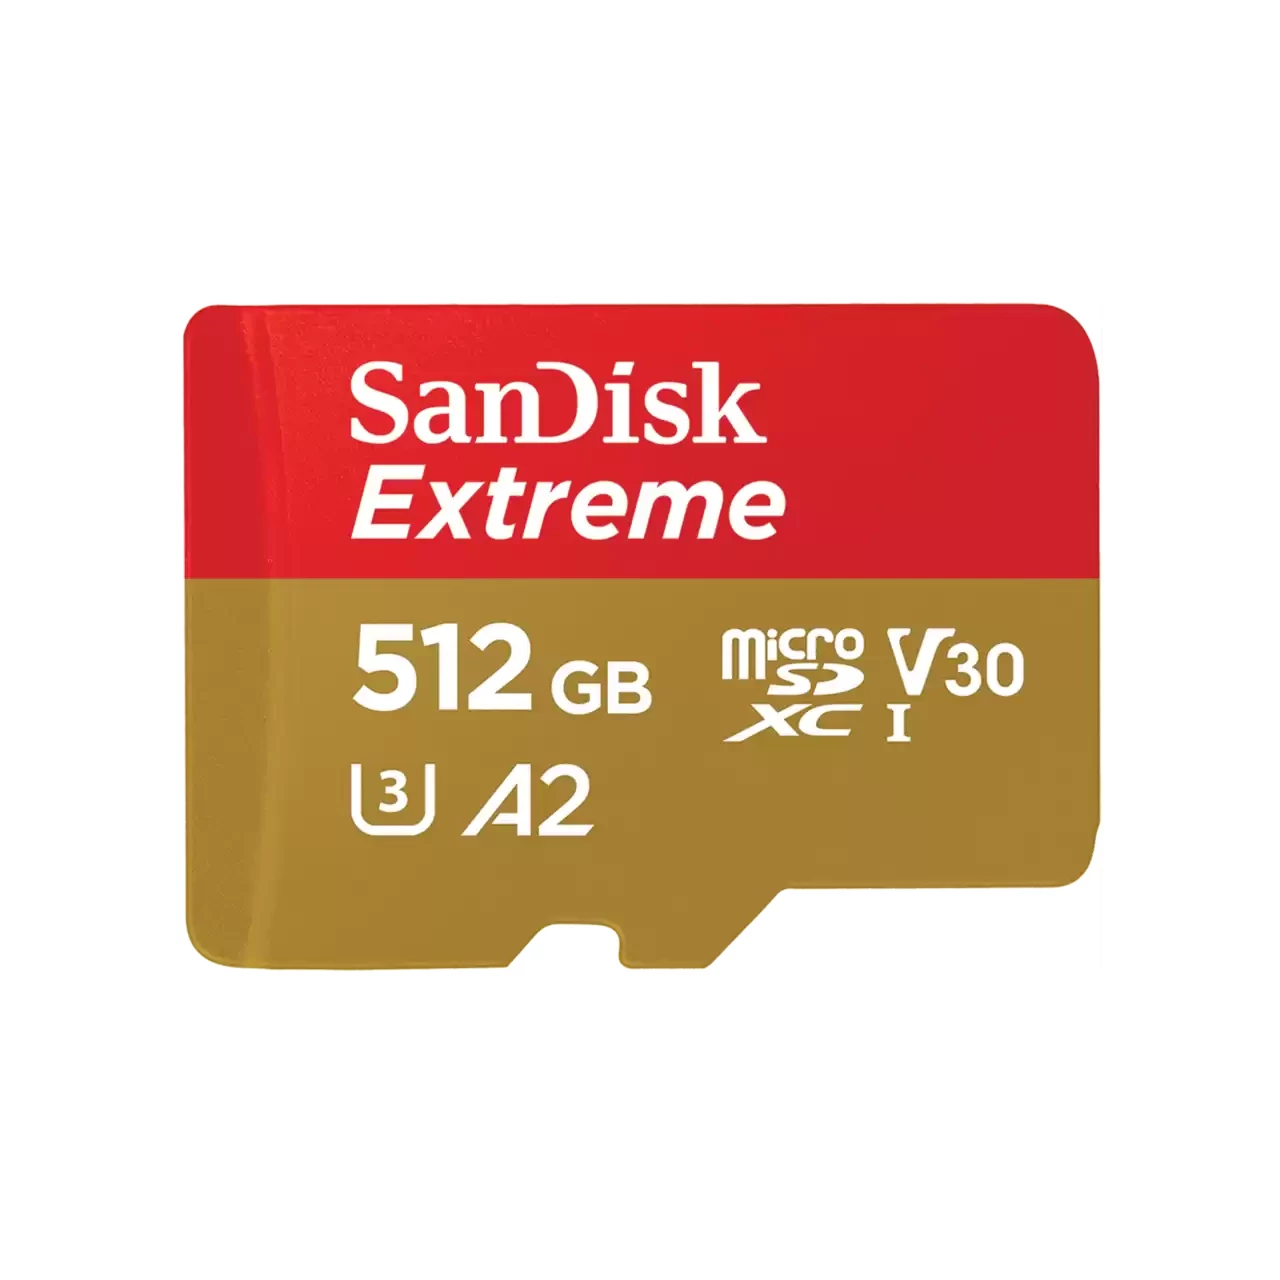 Sandisk Extreme 512Gb MicroSDXC UHS-I Memory Card #SDSQXAV-512G